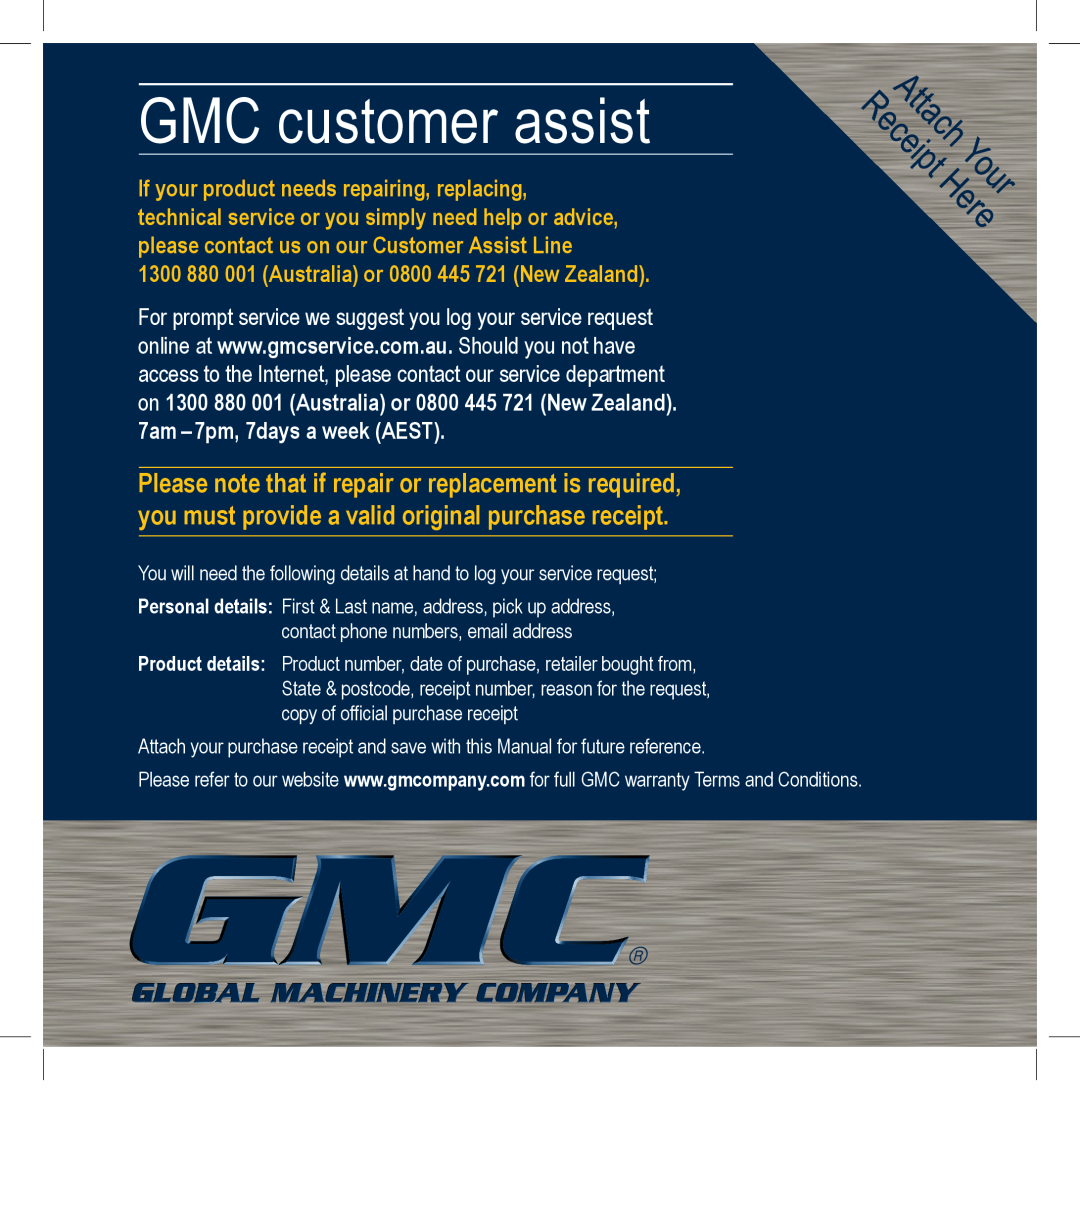 Global Machinery Company RL501A instruction manual GMC customer assist, 1300 880 001 Australia or 0800 445 721 New Zealand 